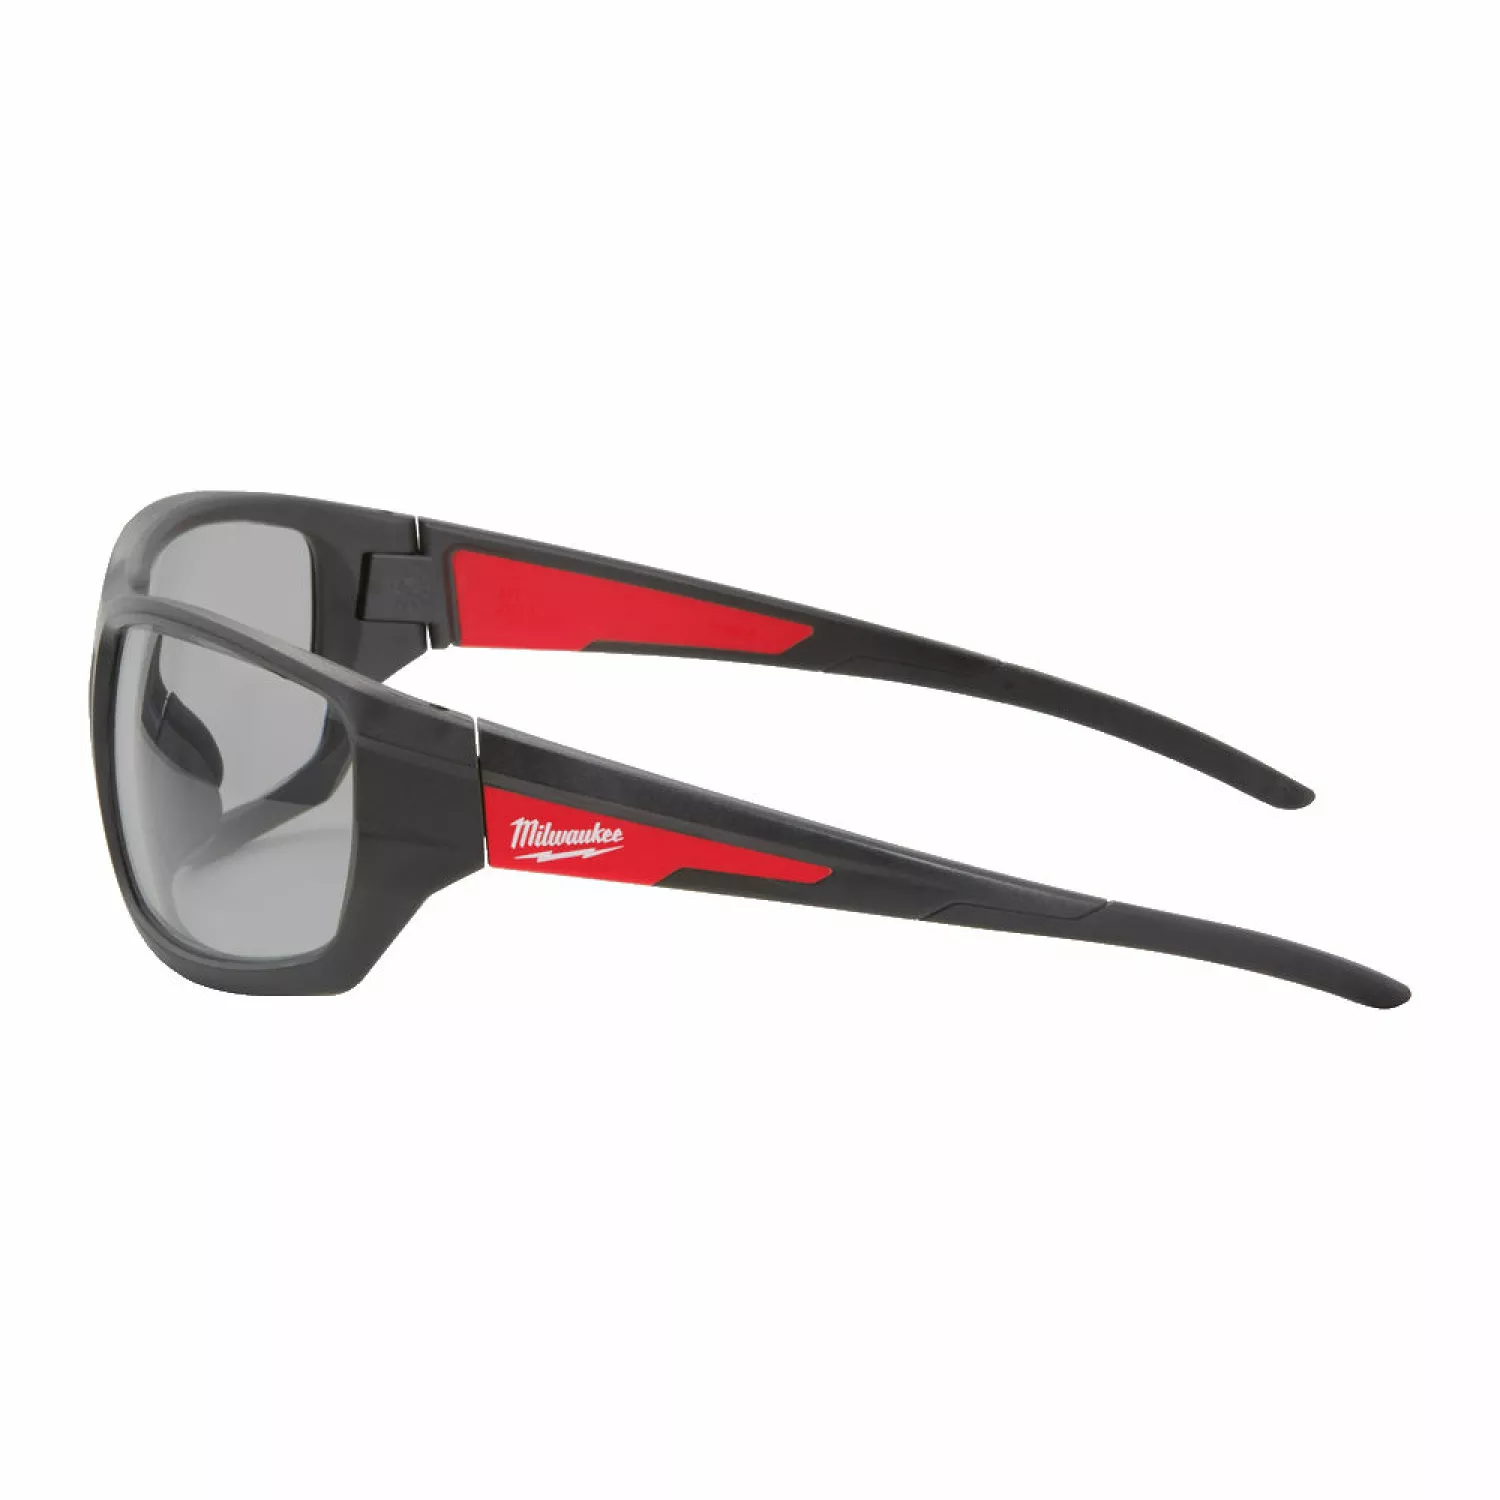 Milwaukee 4932478908 Performance veiligheidsbril - grijs